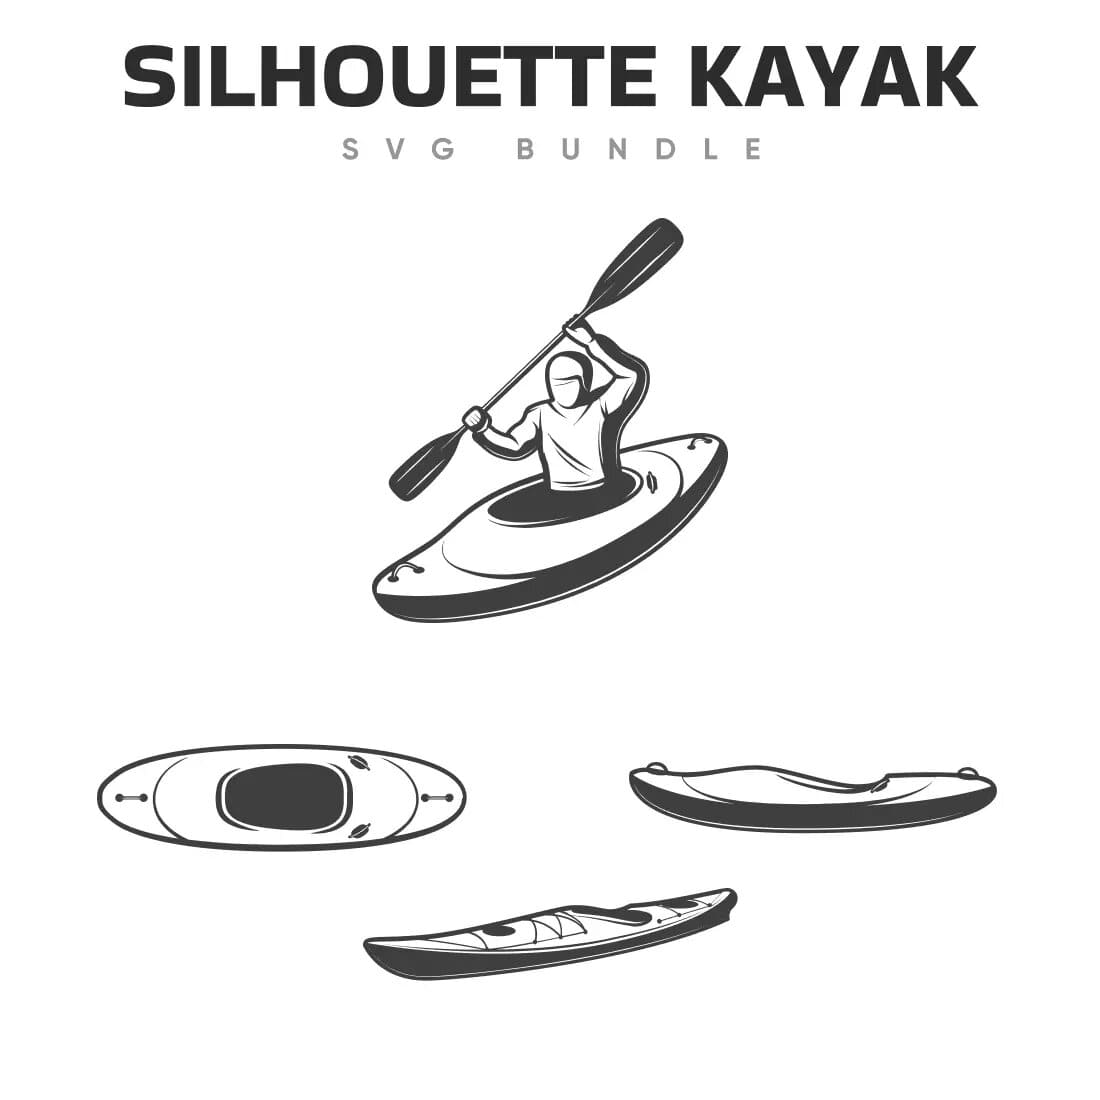 Silhouette Kayak SVG Bundle Preview 5.